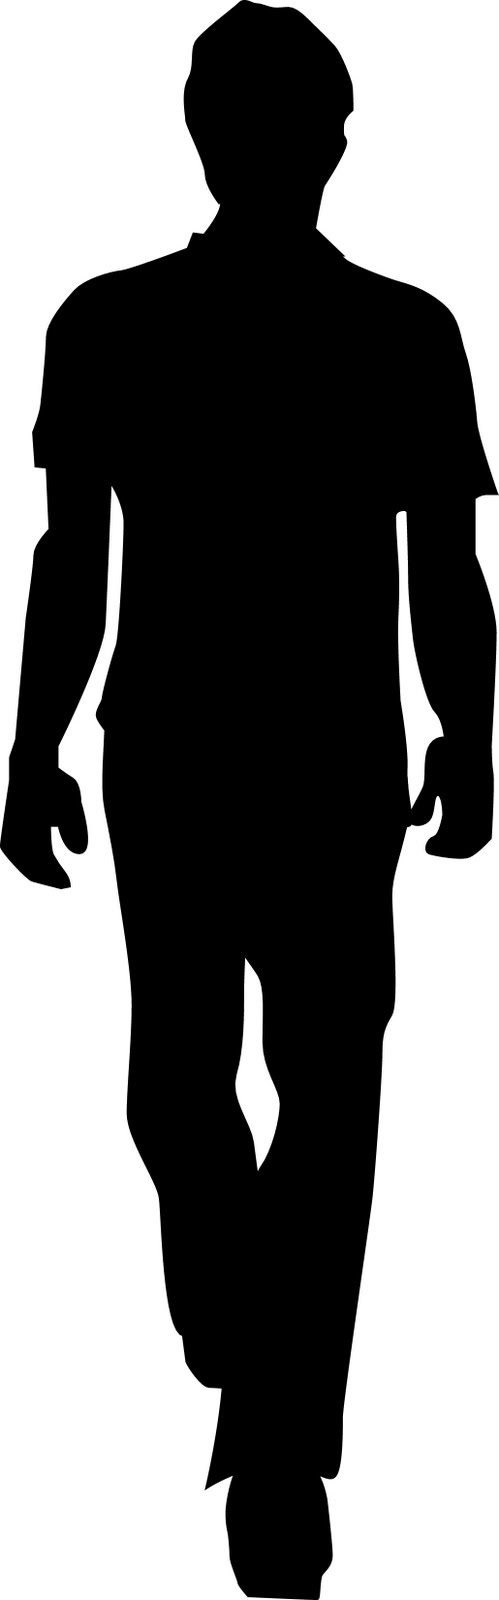 clip art silhouette man - photo #45